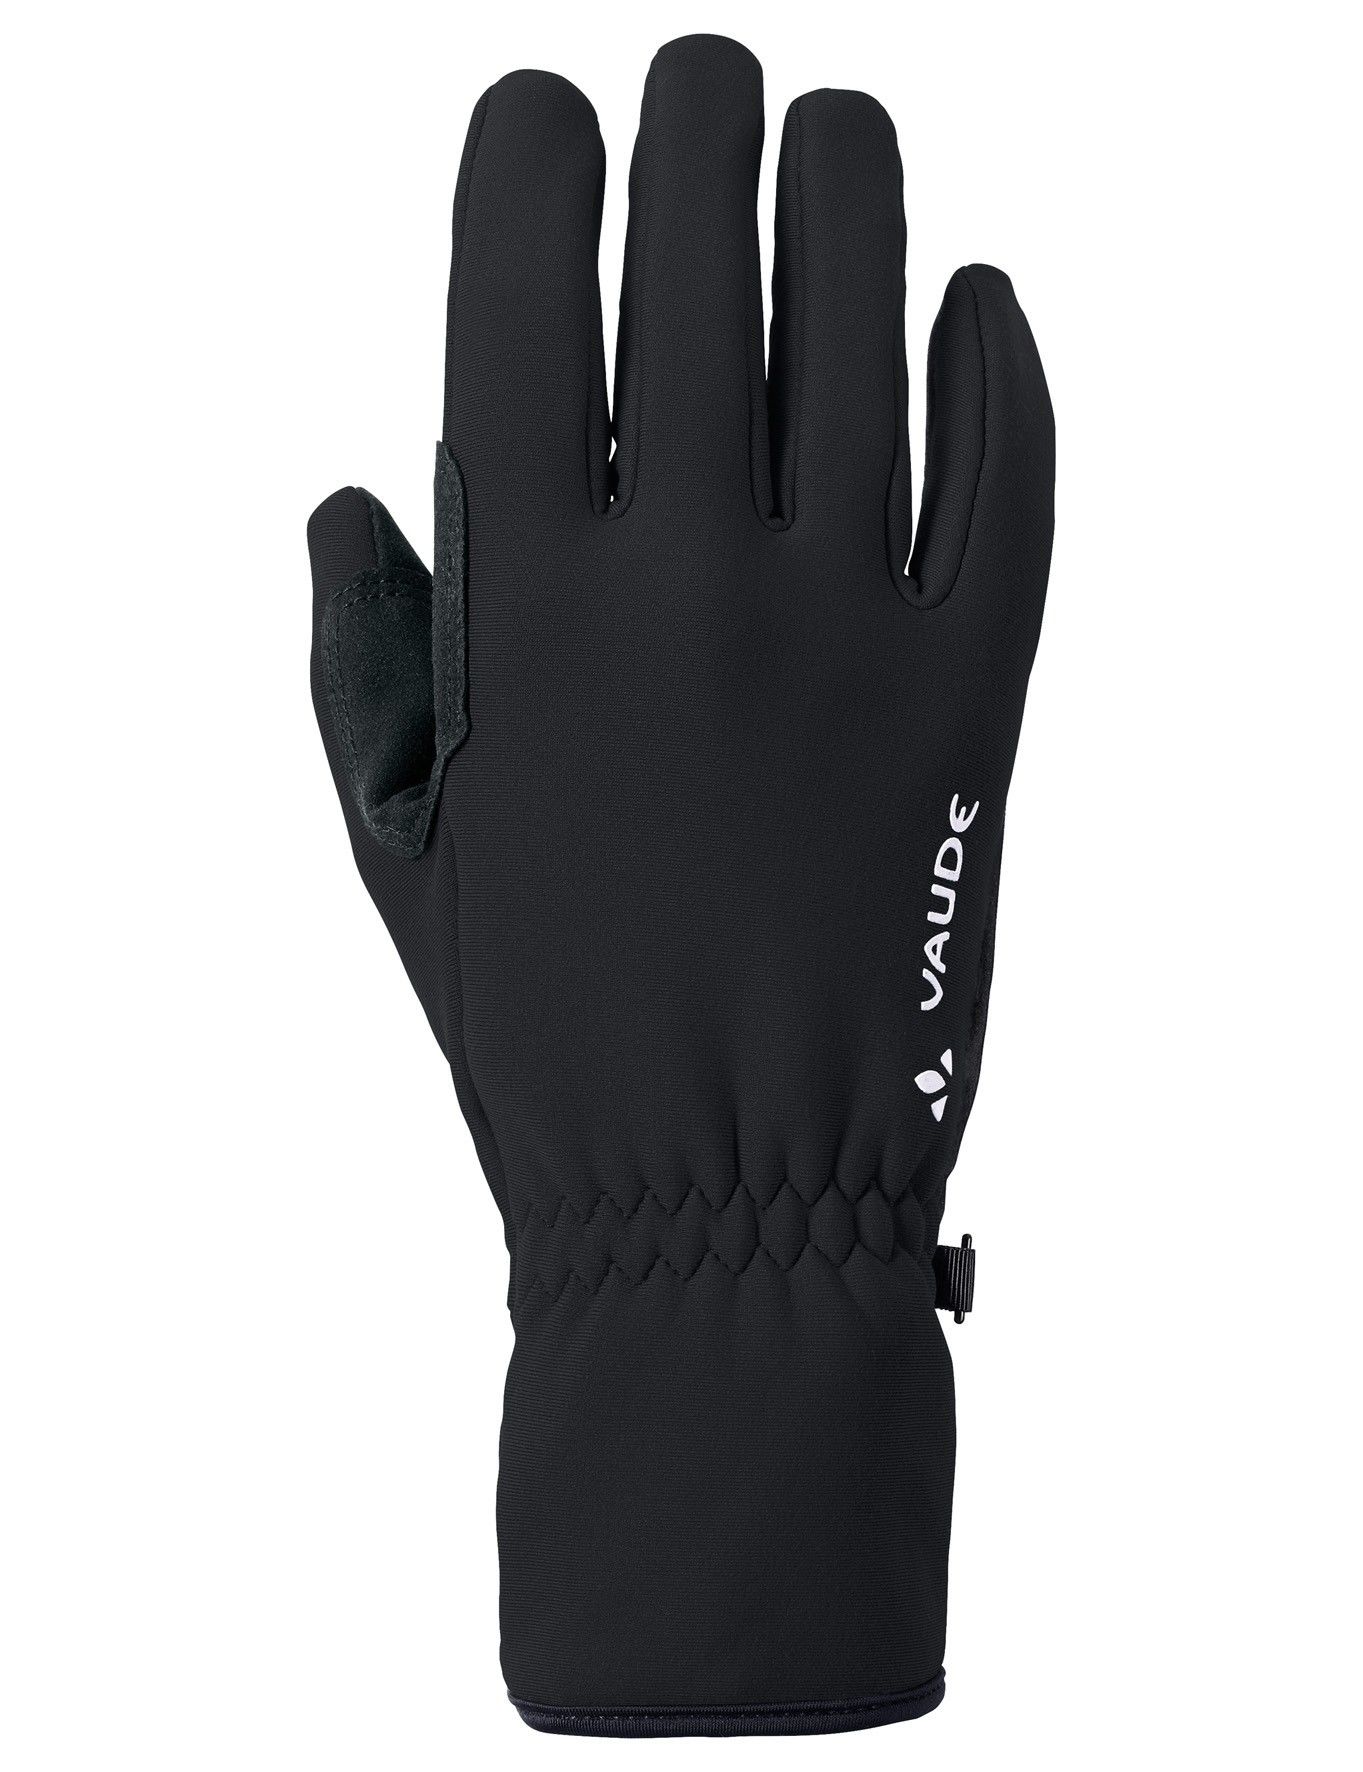 Vaude Basodino Gloves II Schwarz- Fingerhandschuhe- Grsse 8 - Farbe Black